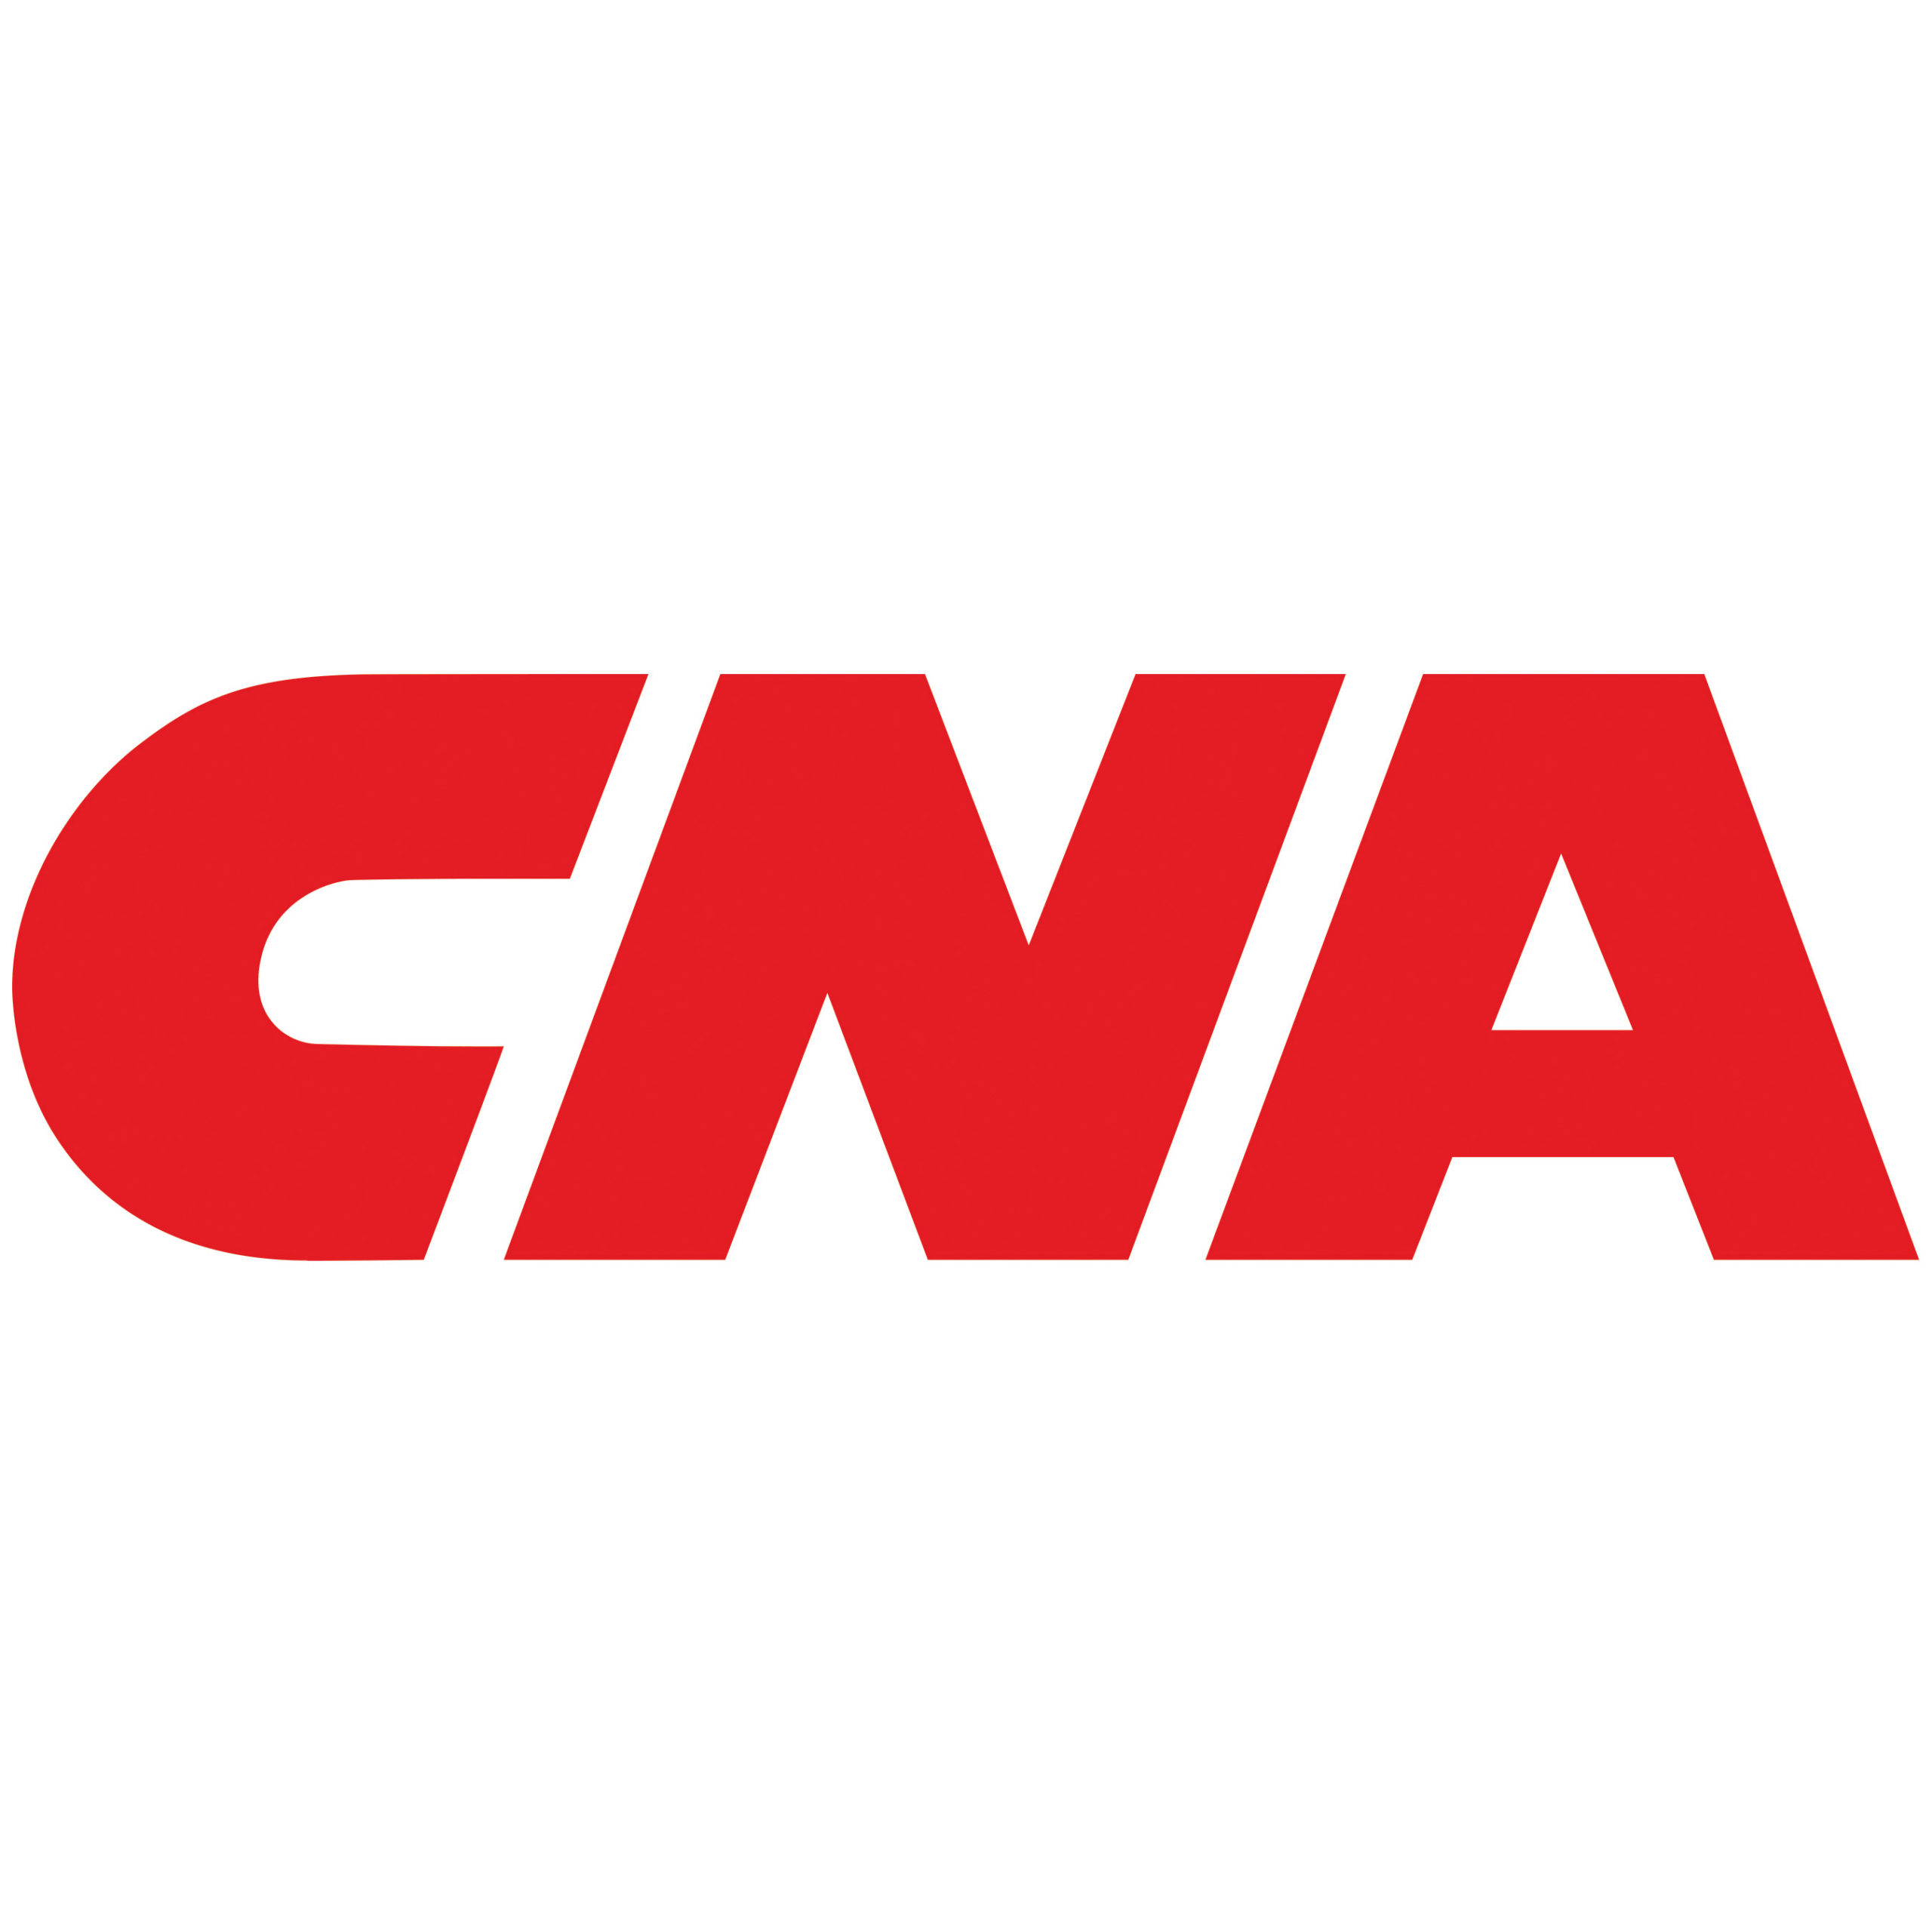 CNA Insurance Equipment Breakdown Coverage